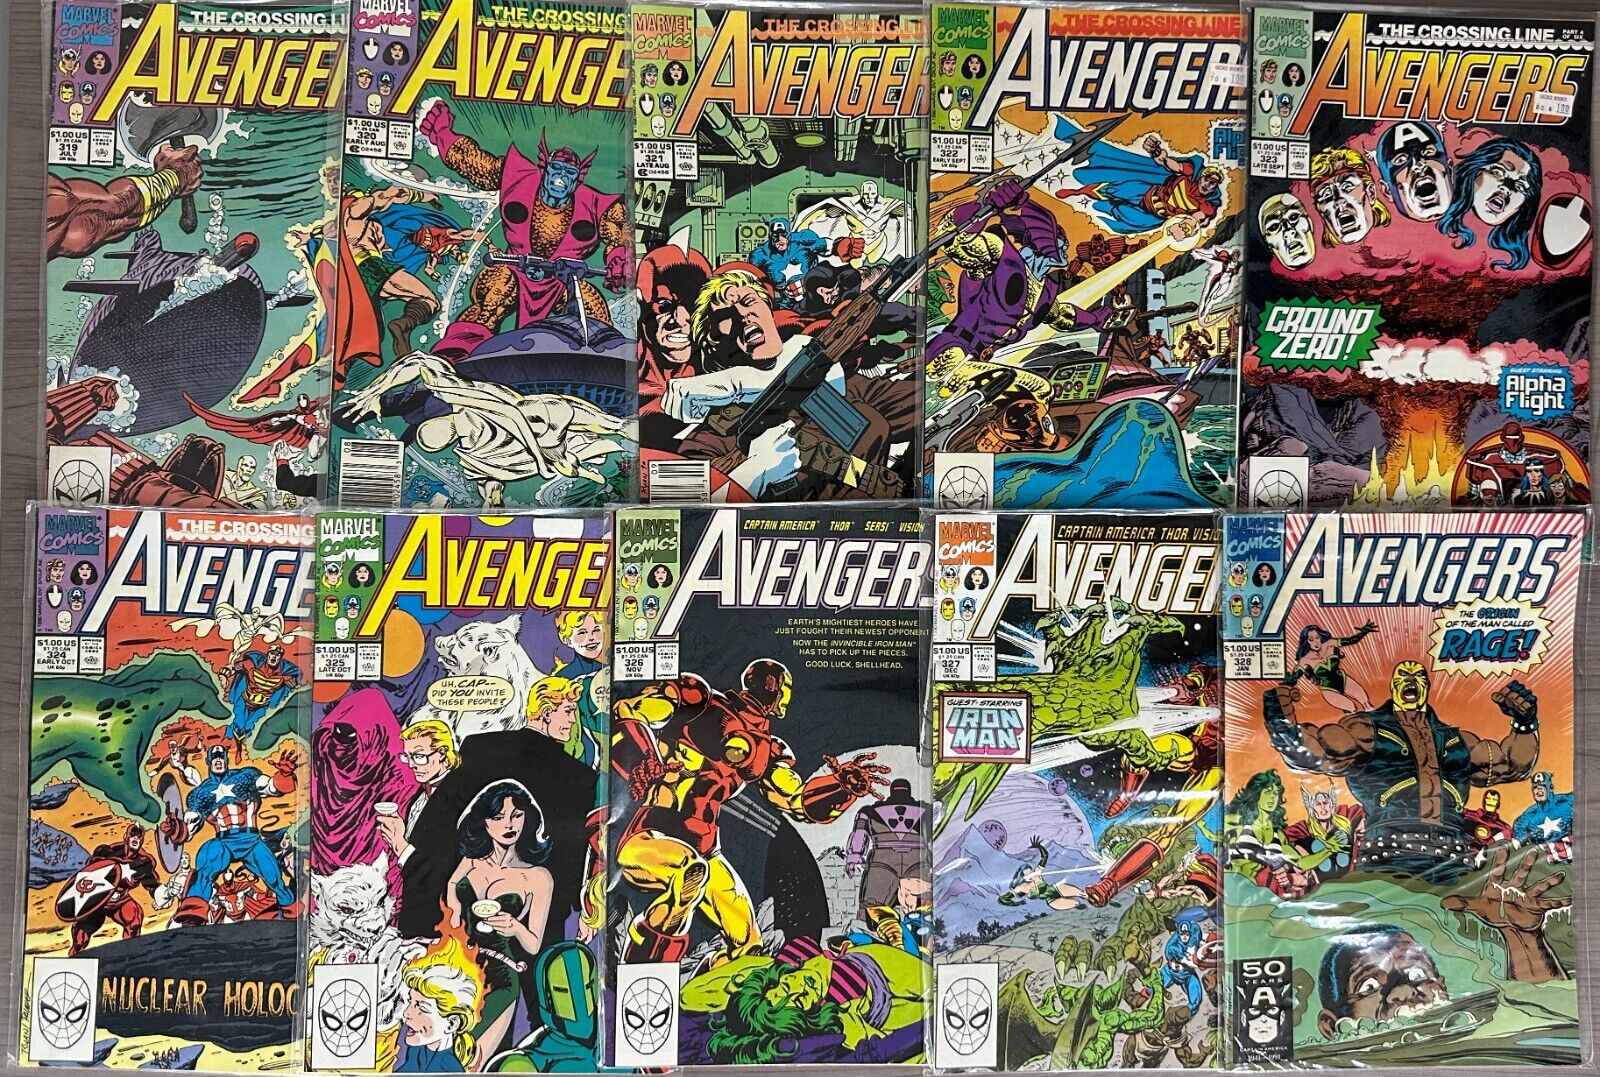 Lot of 10 Avengers Comics, Issues 319-328, *combine lot shipping*